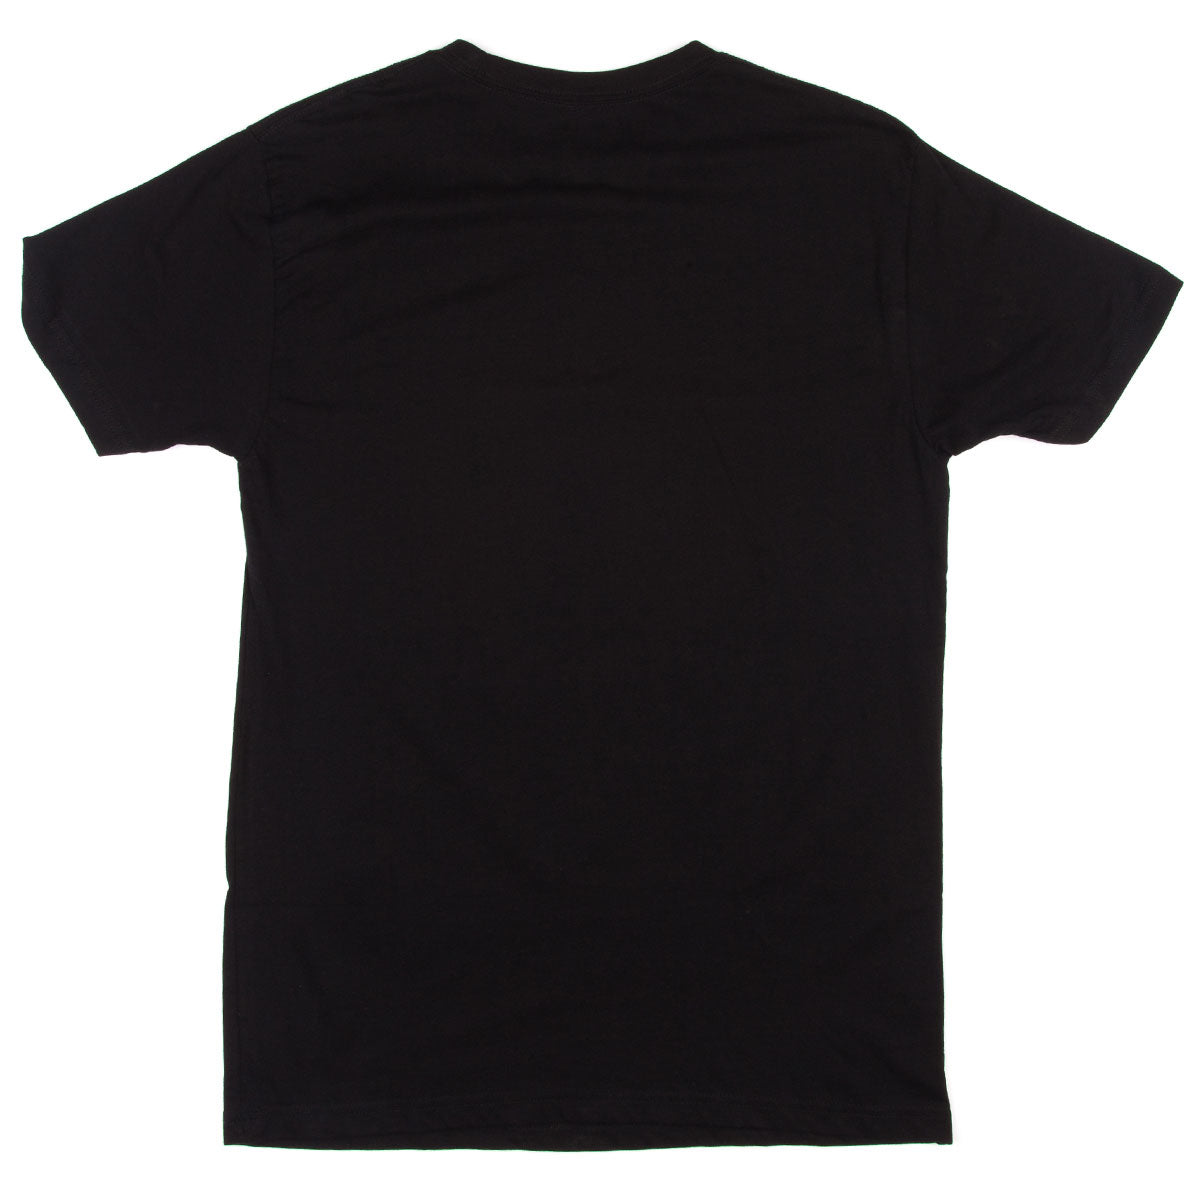 Zero Single Skull T-Shirt - Black image 2